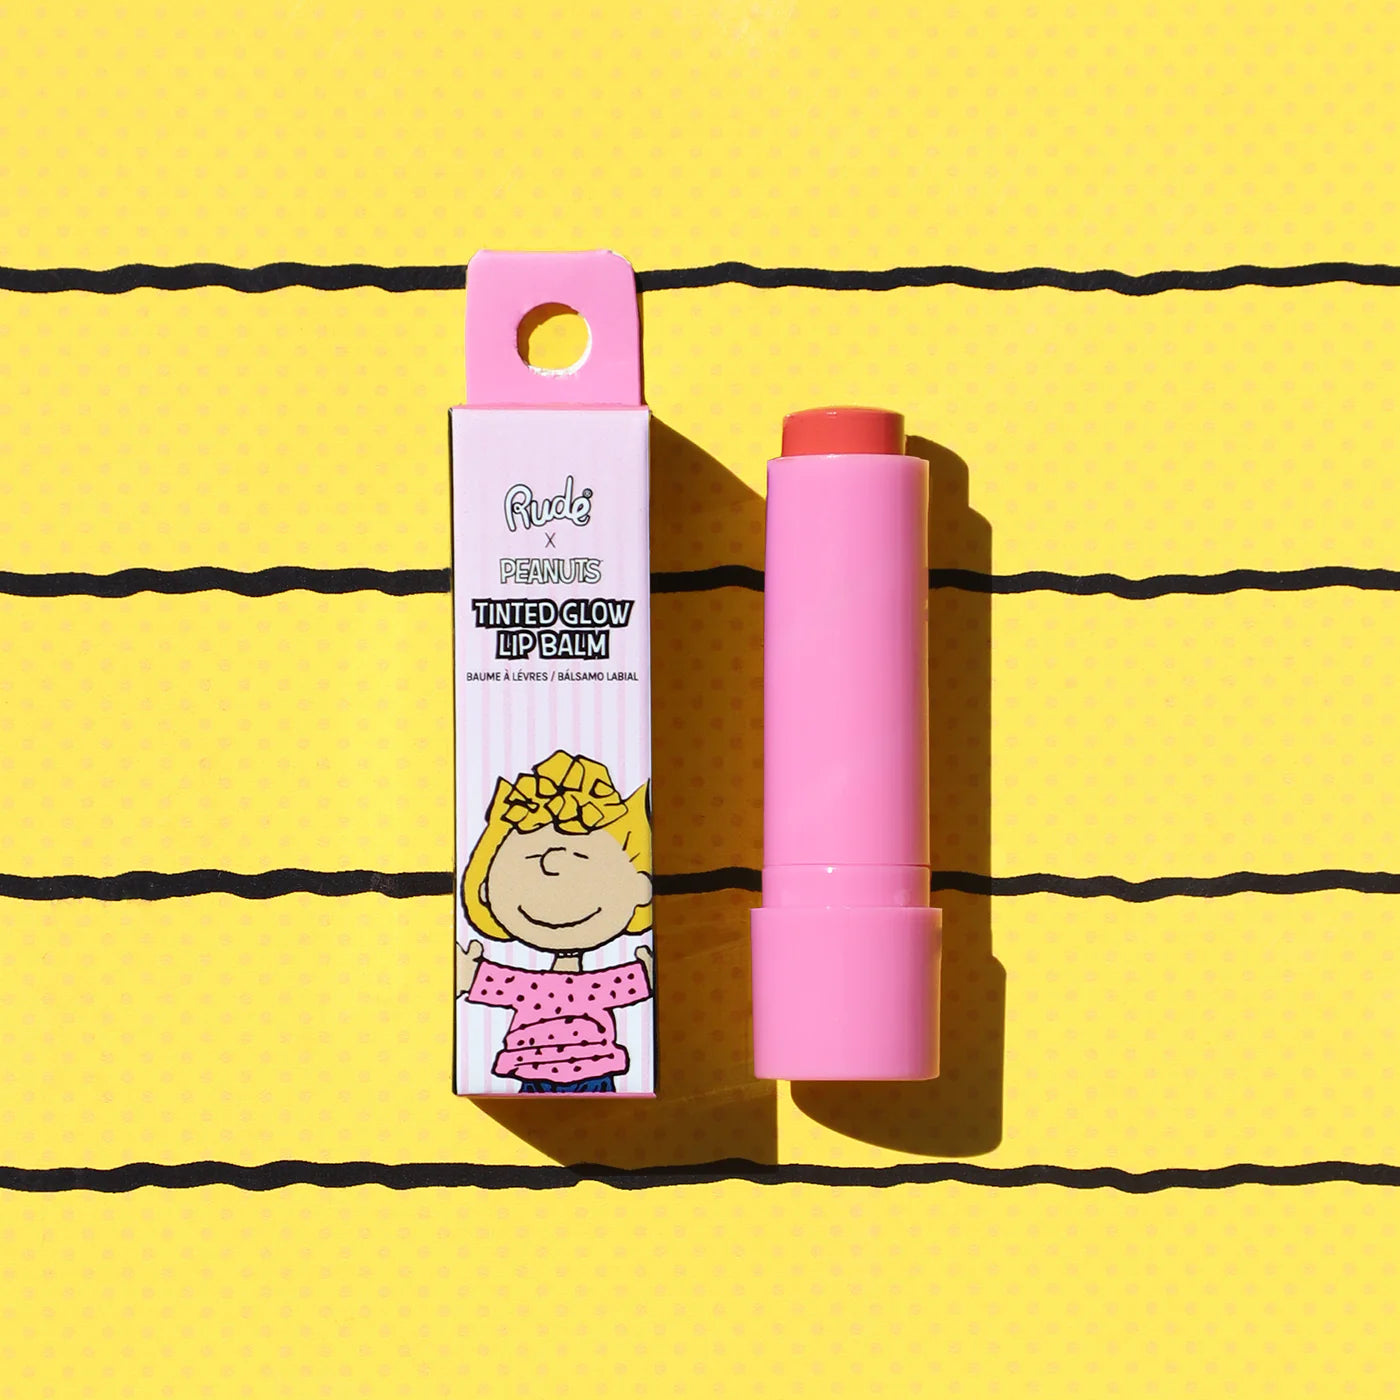 Rude Cosmetics - Peanuts Tinted Glow Lip Balm Sally